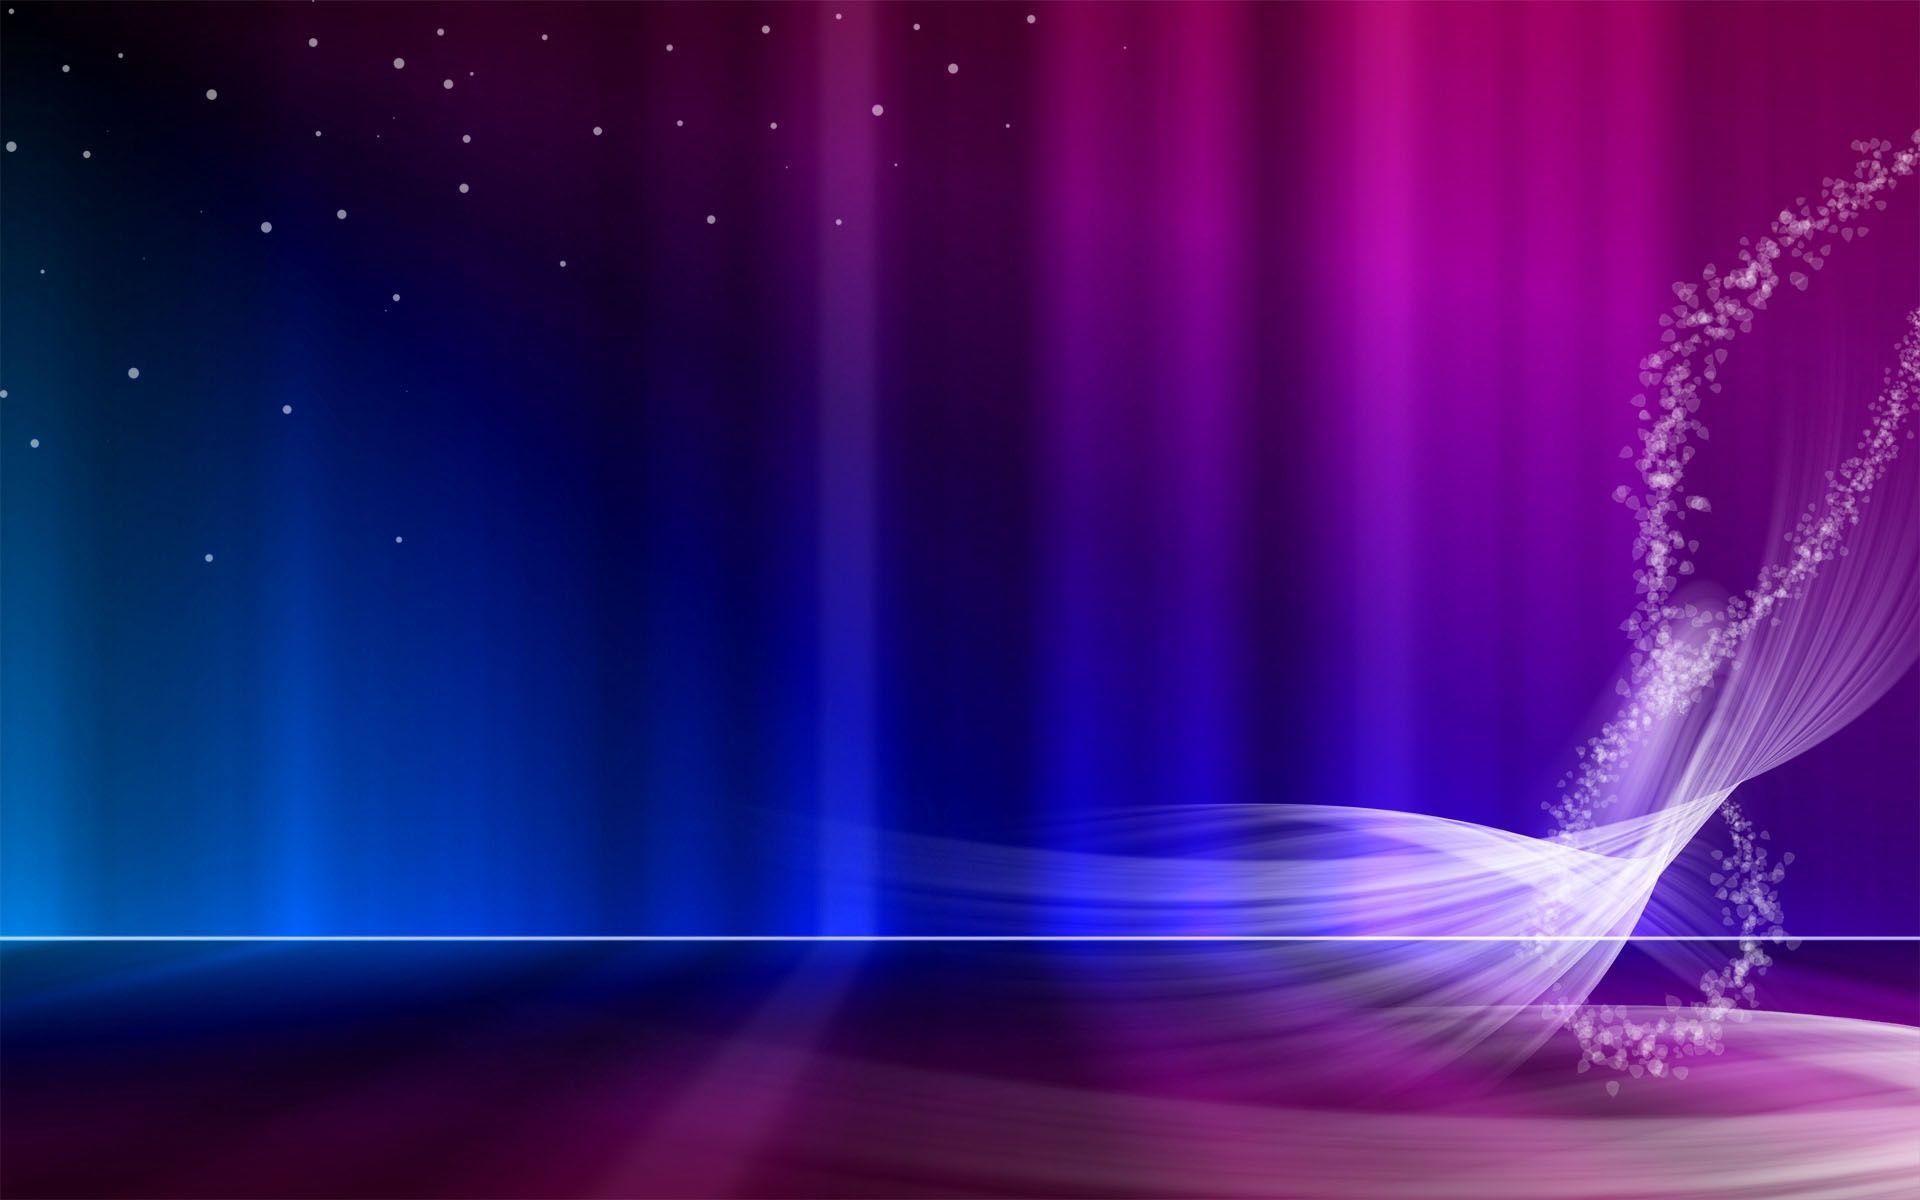 Free Desktop Background For Windows Vista. Piccry.com: Picture